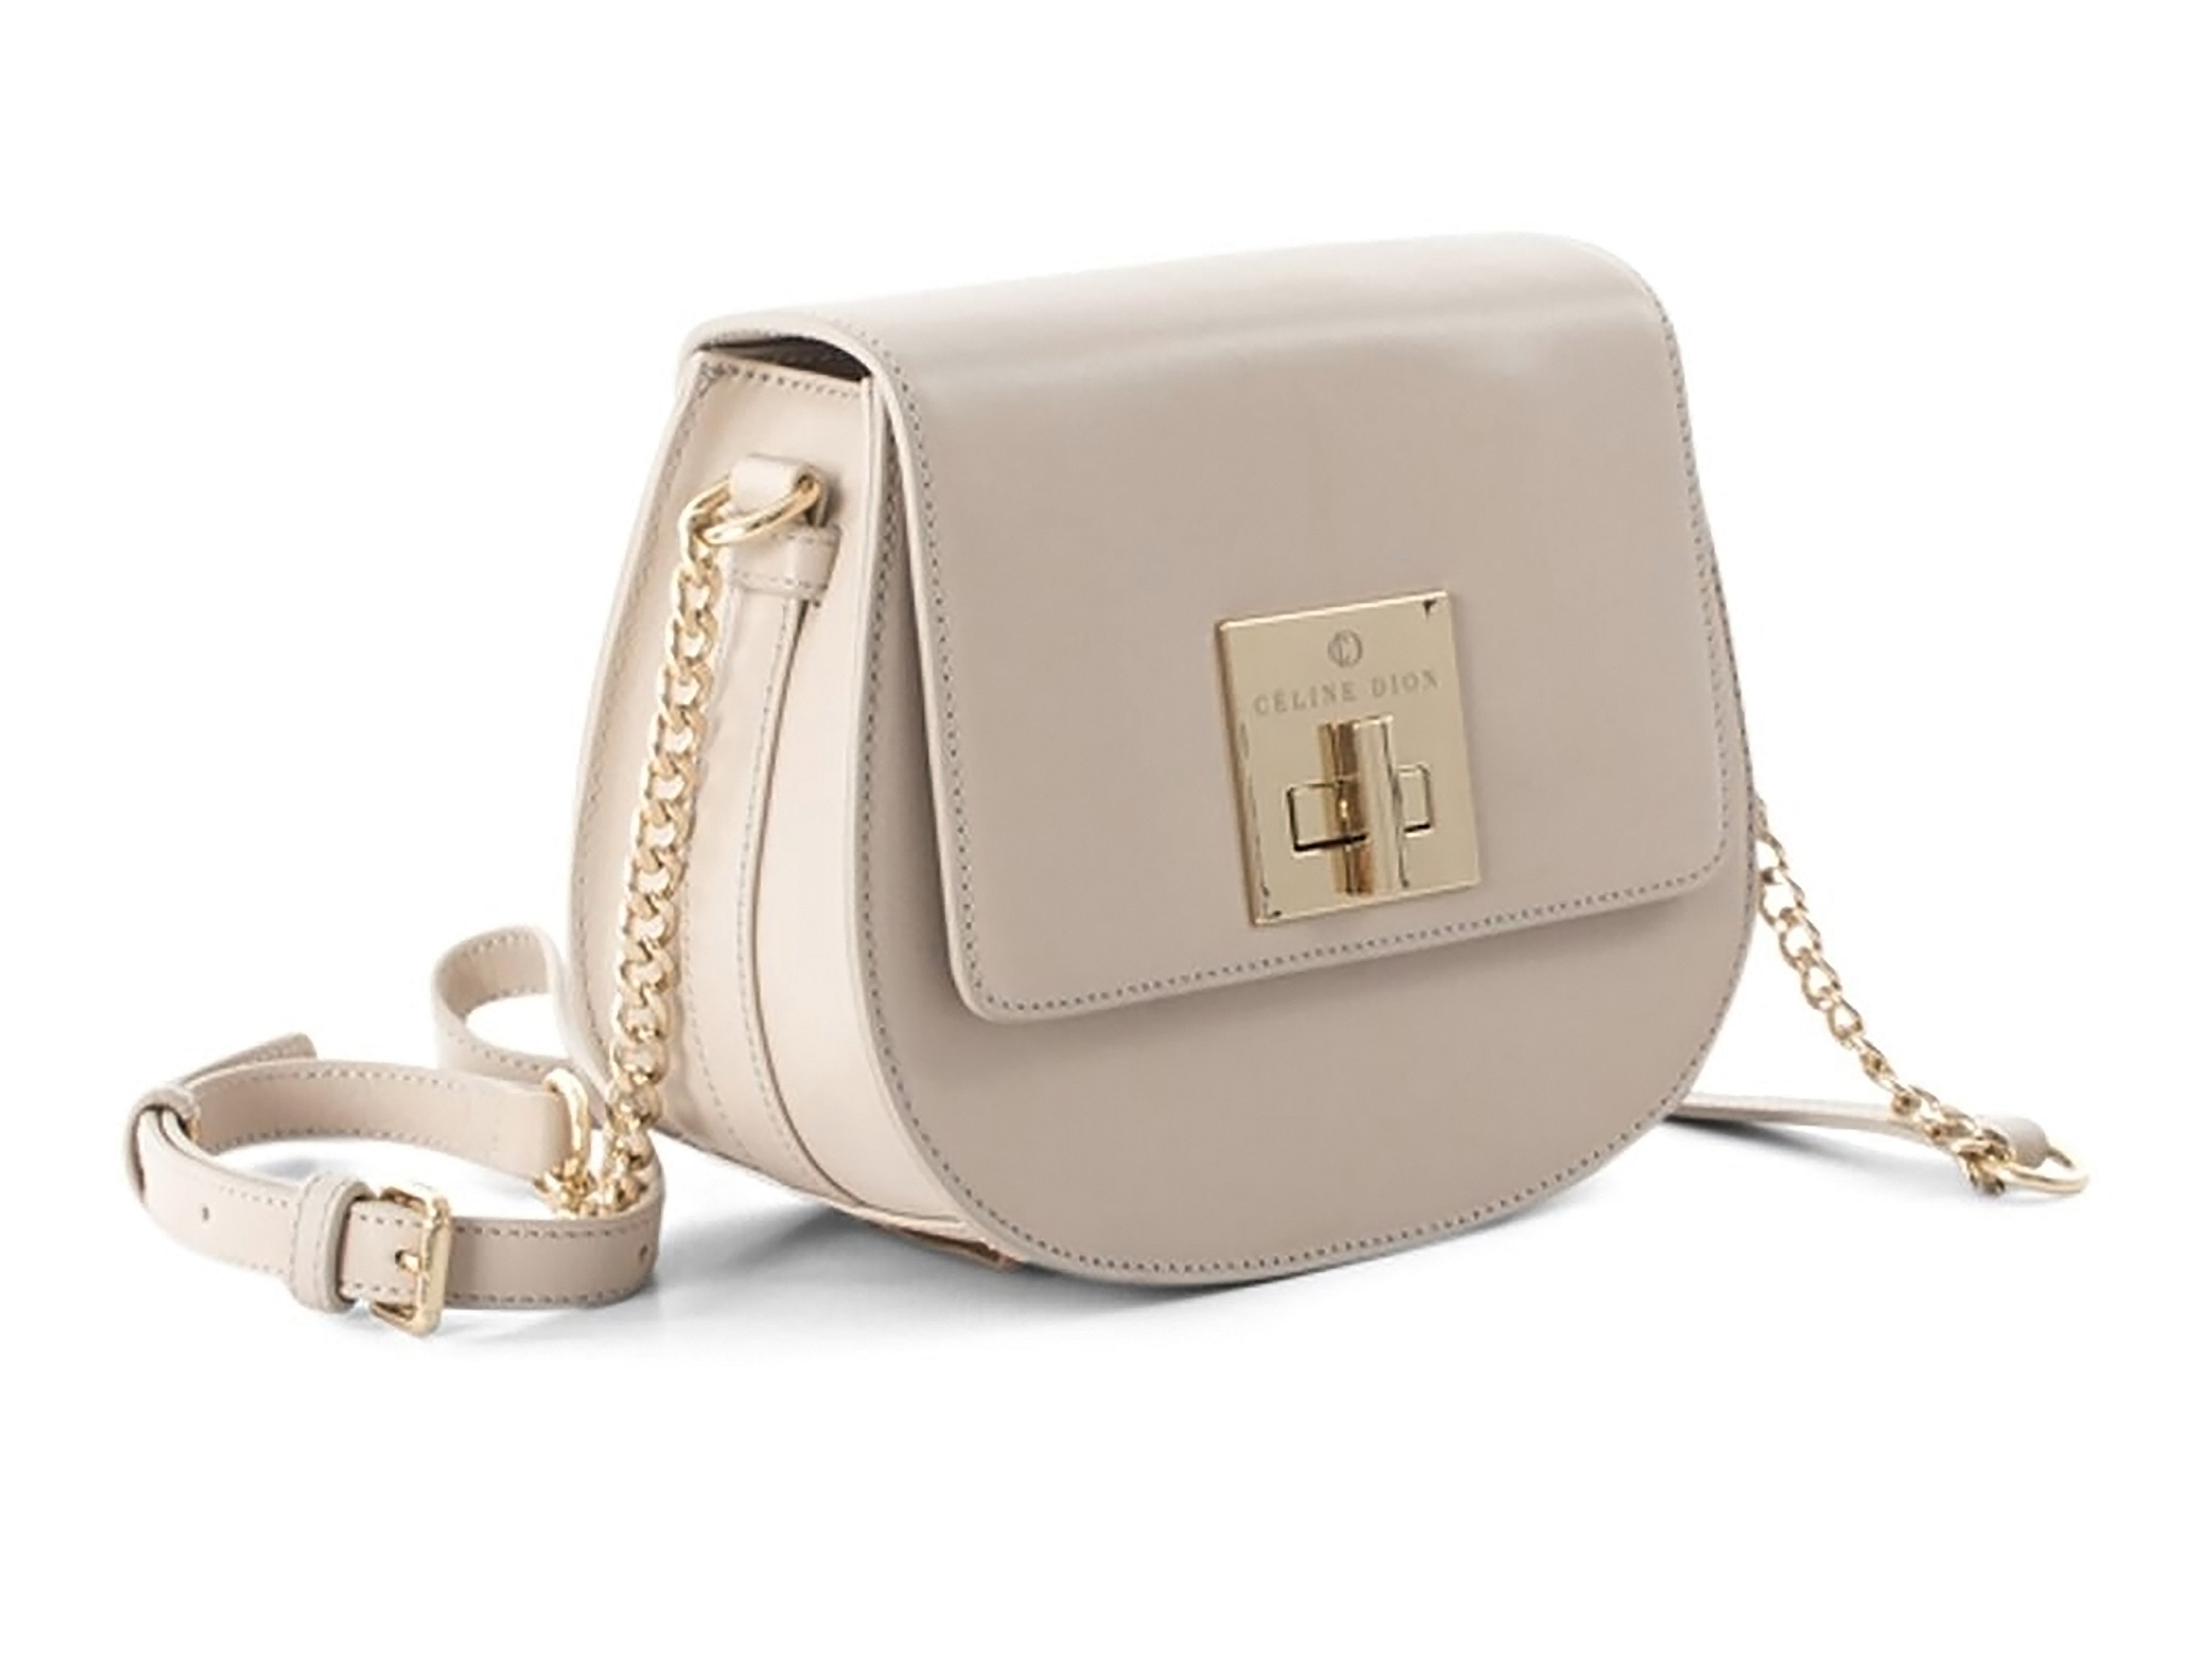 Amazoncom Celine Dion ADAGIO  Flap handbag FLP5043Black  Clothing  Shoes  Jewelry